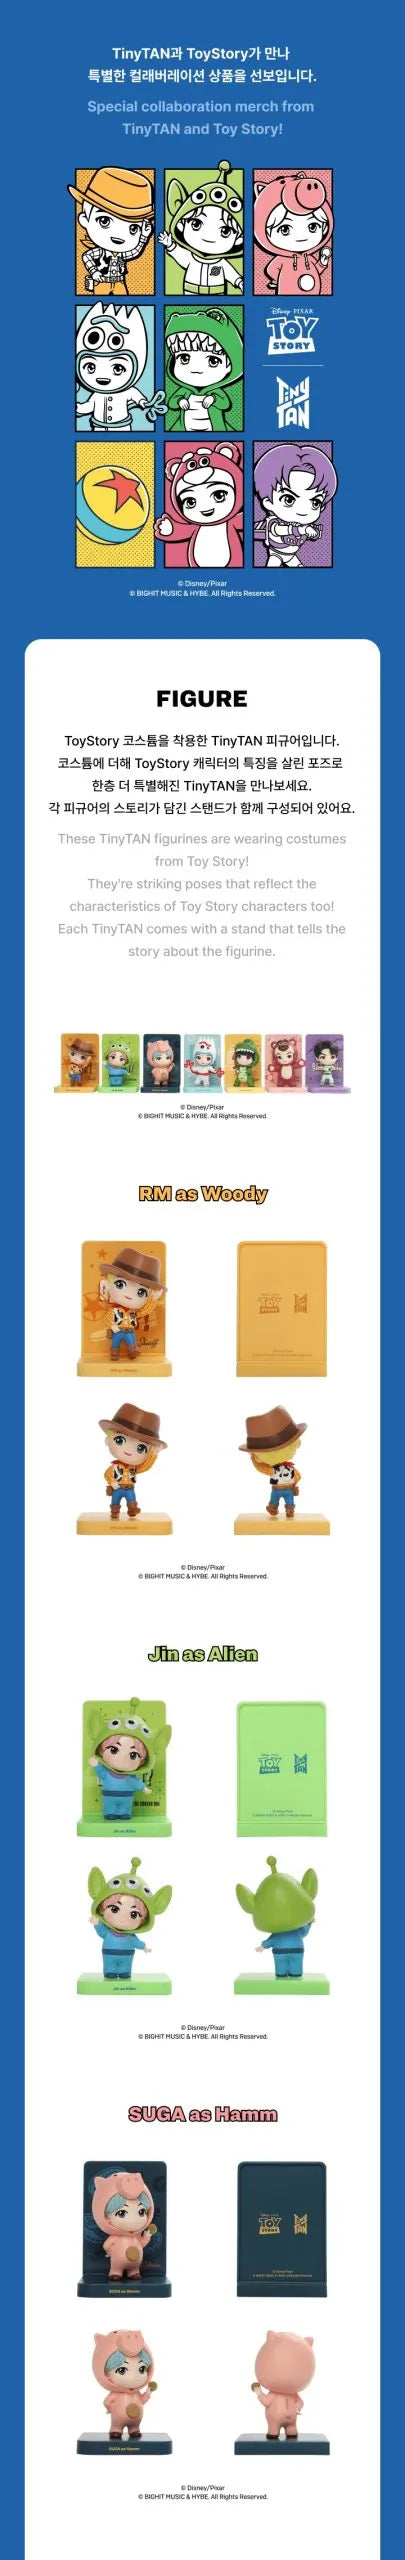 Preorder BTS x Toy Story Tiny Tan Figurine